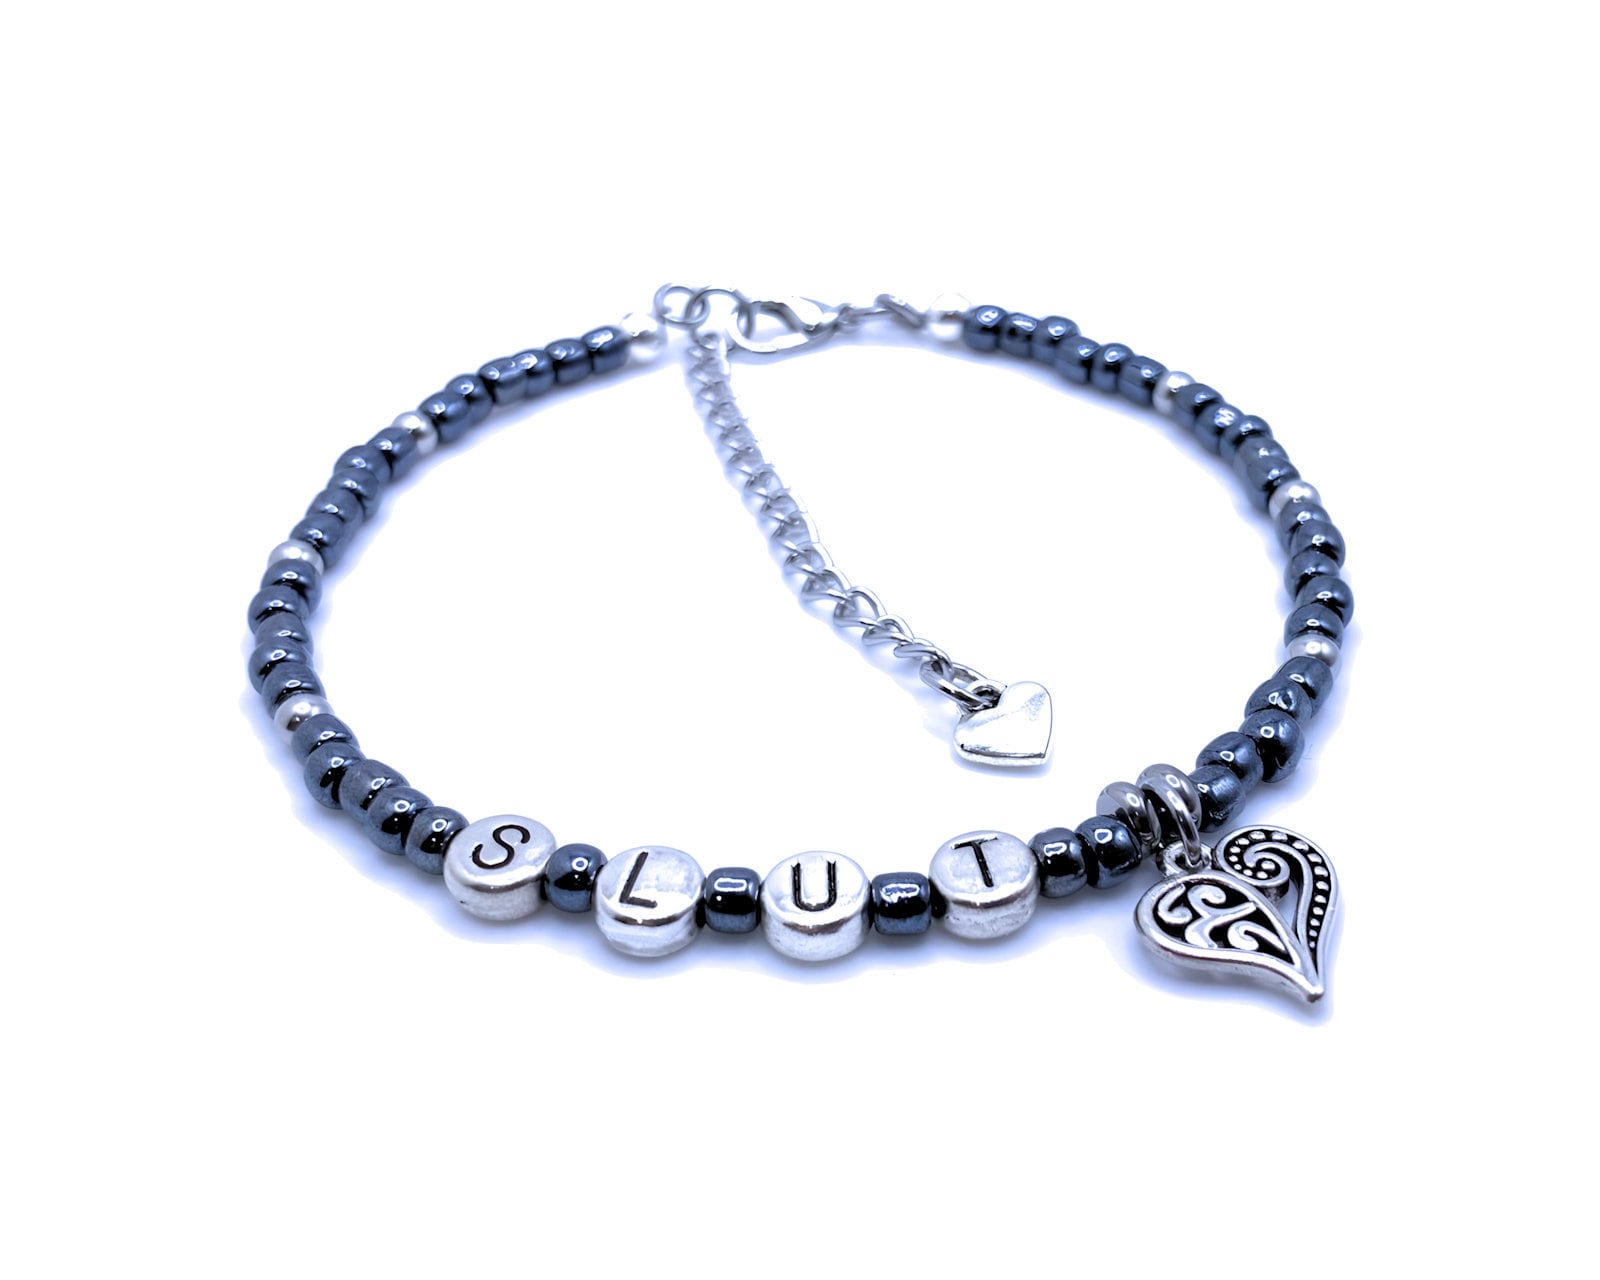 Femboy Bracelet or Anklet or Choker Necklace, Christmas Gift Idea